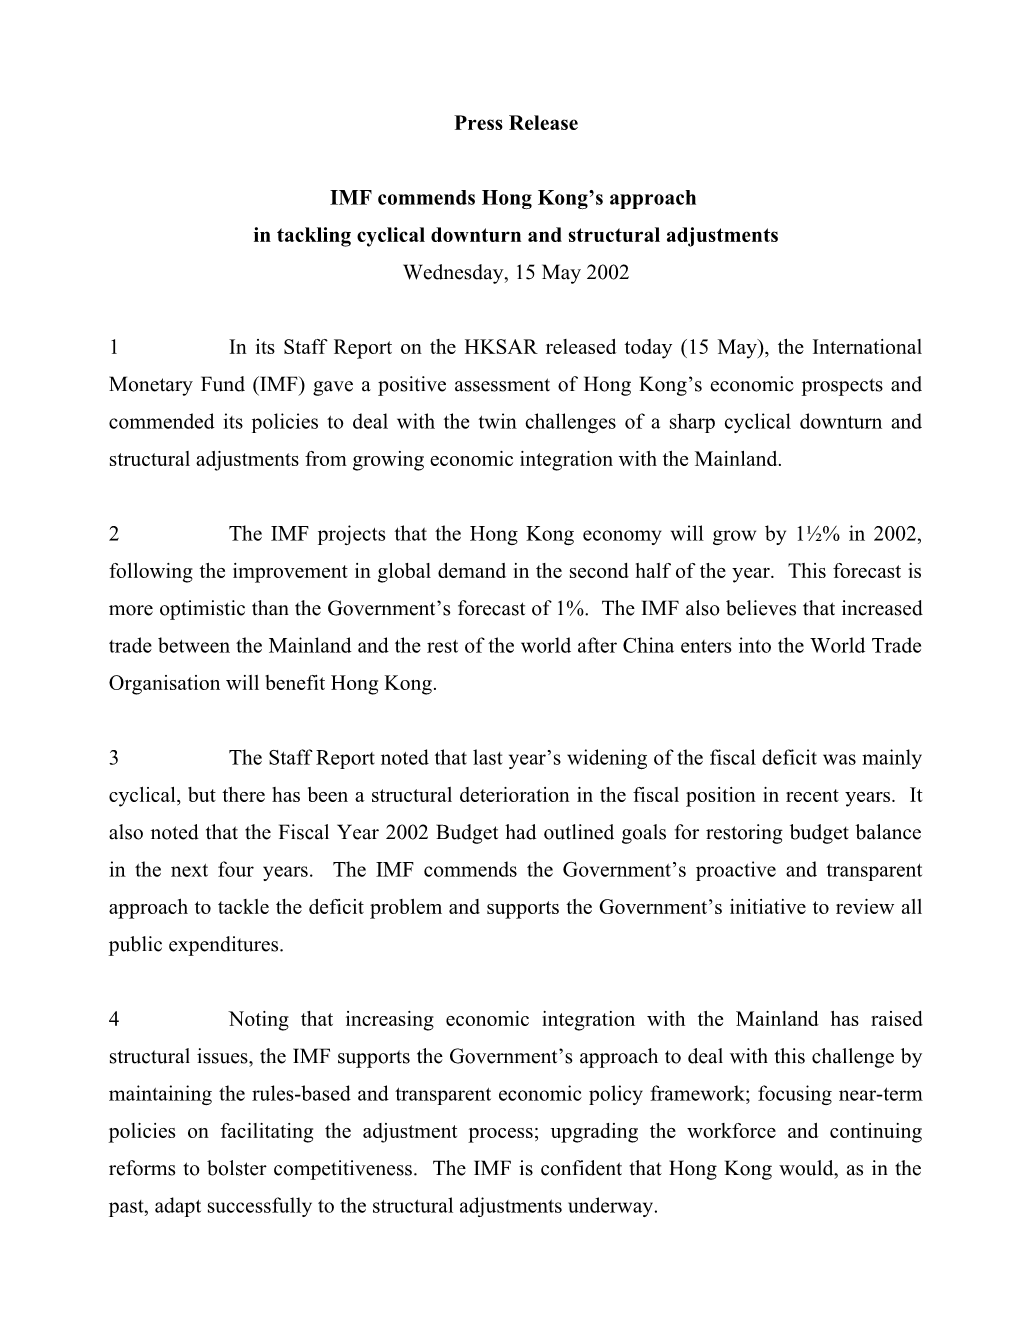 IMF Commends Hong Kong S Approach